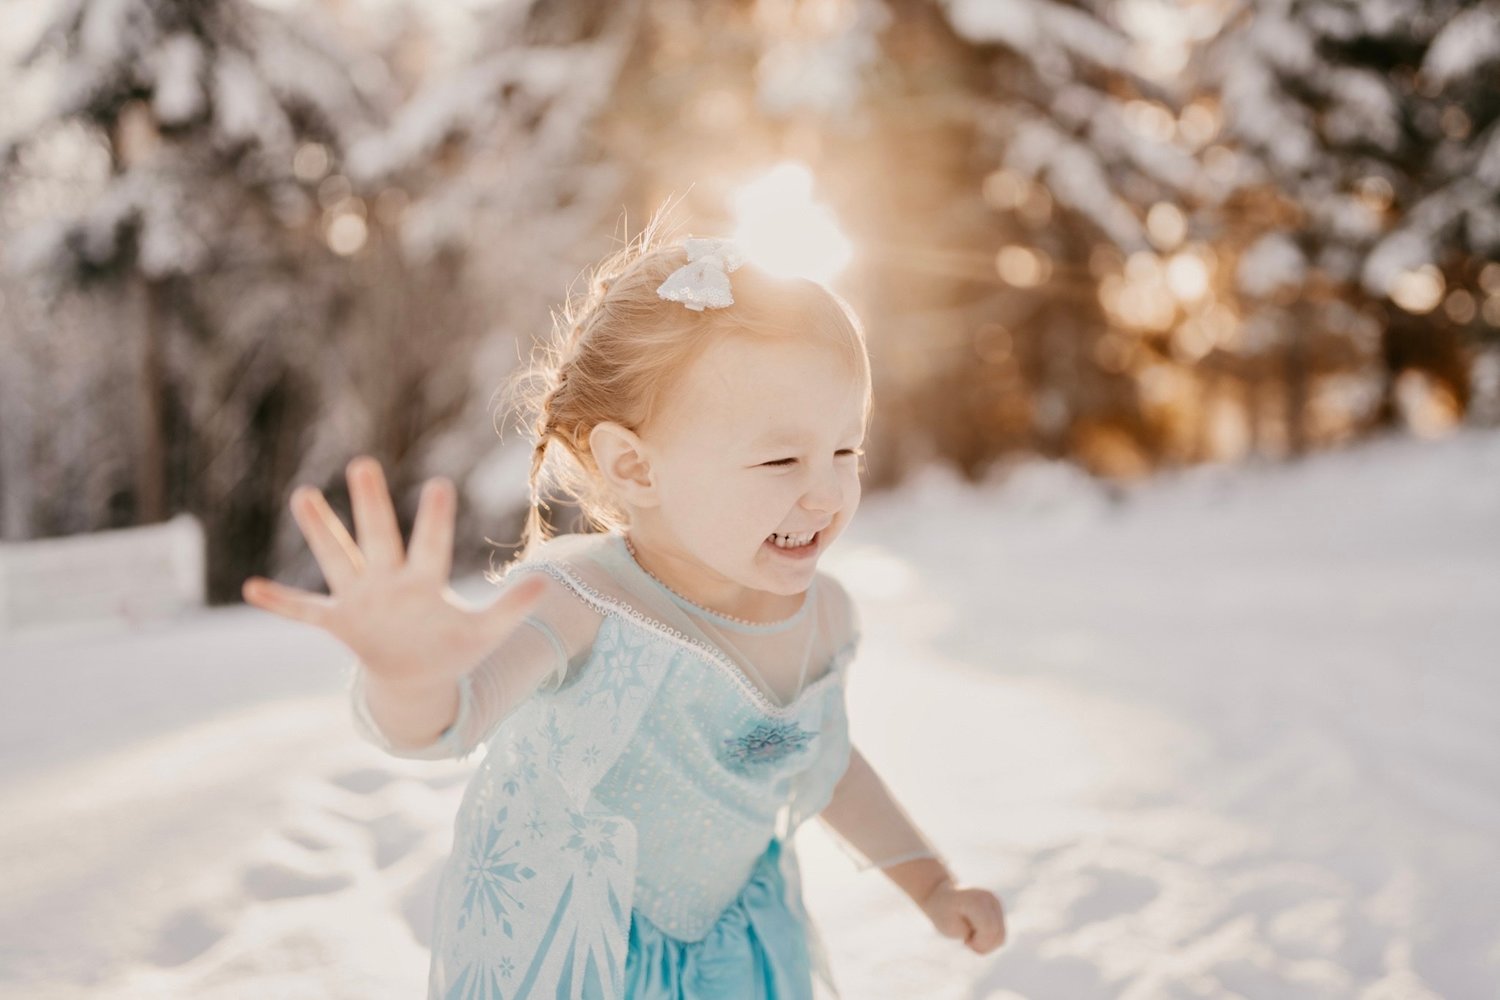 "Queen Elsa (Rowyn Ray, age 2) having a snow day." — Jordan Ray